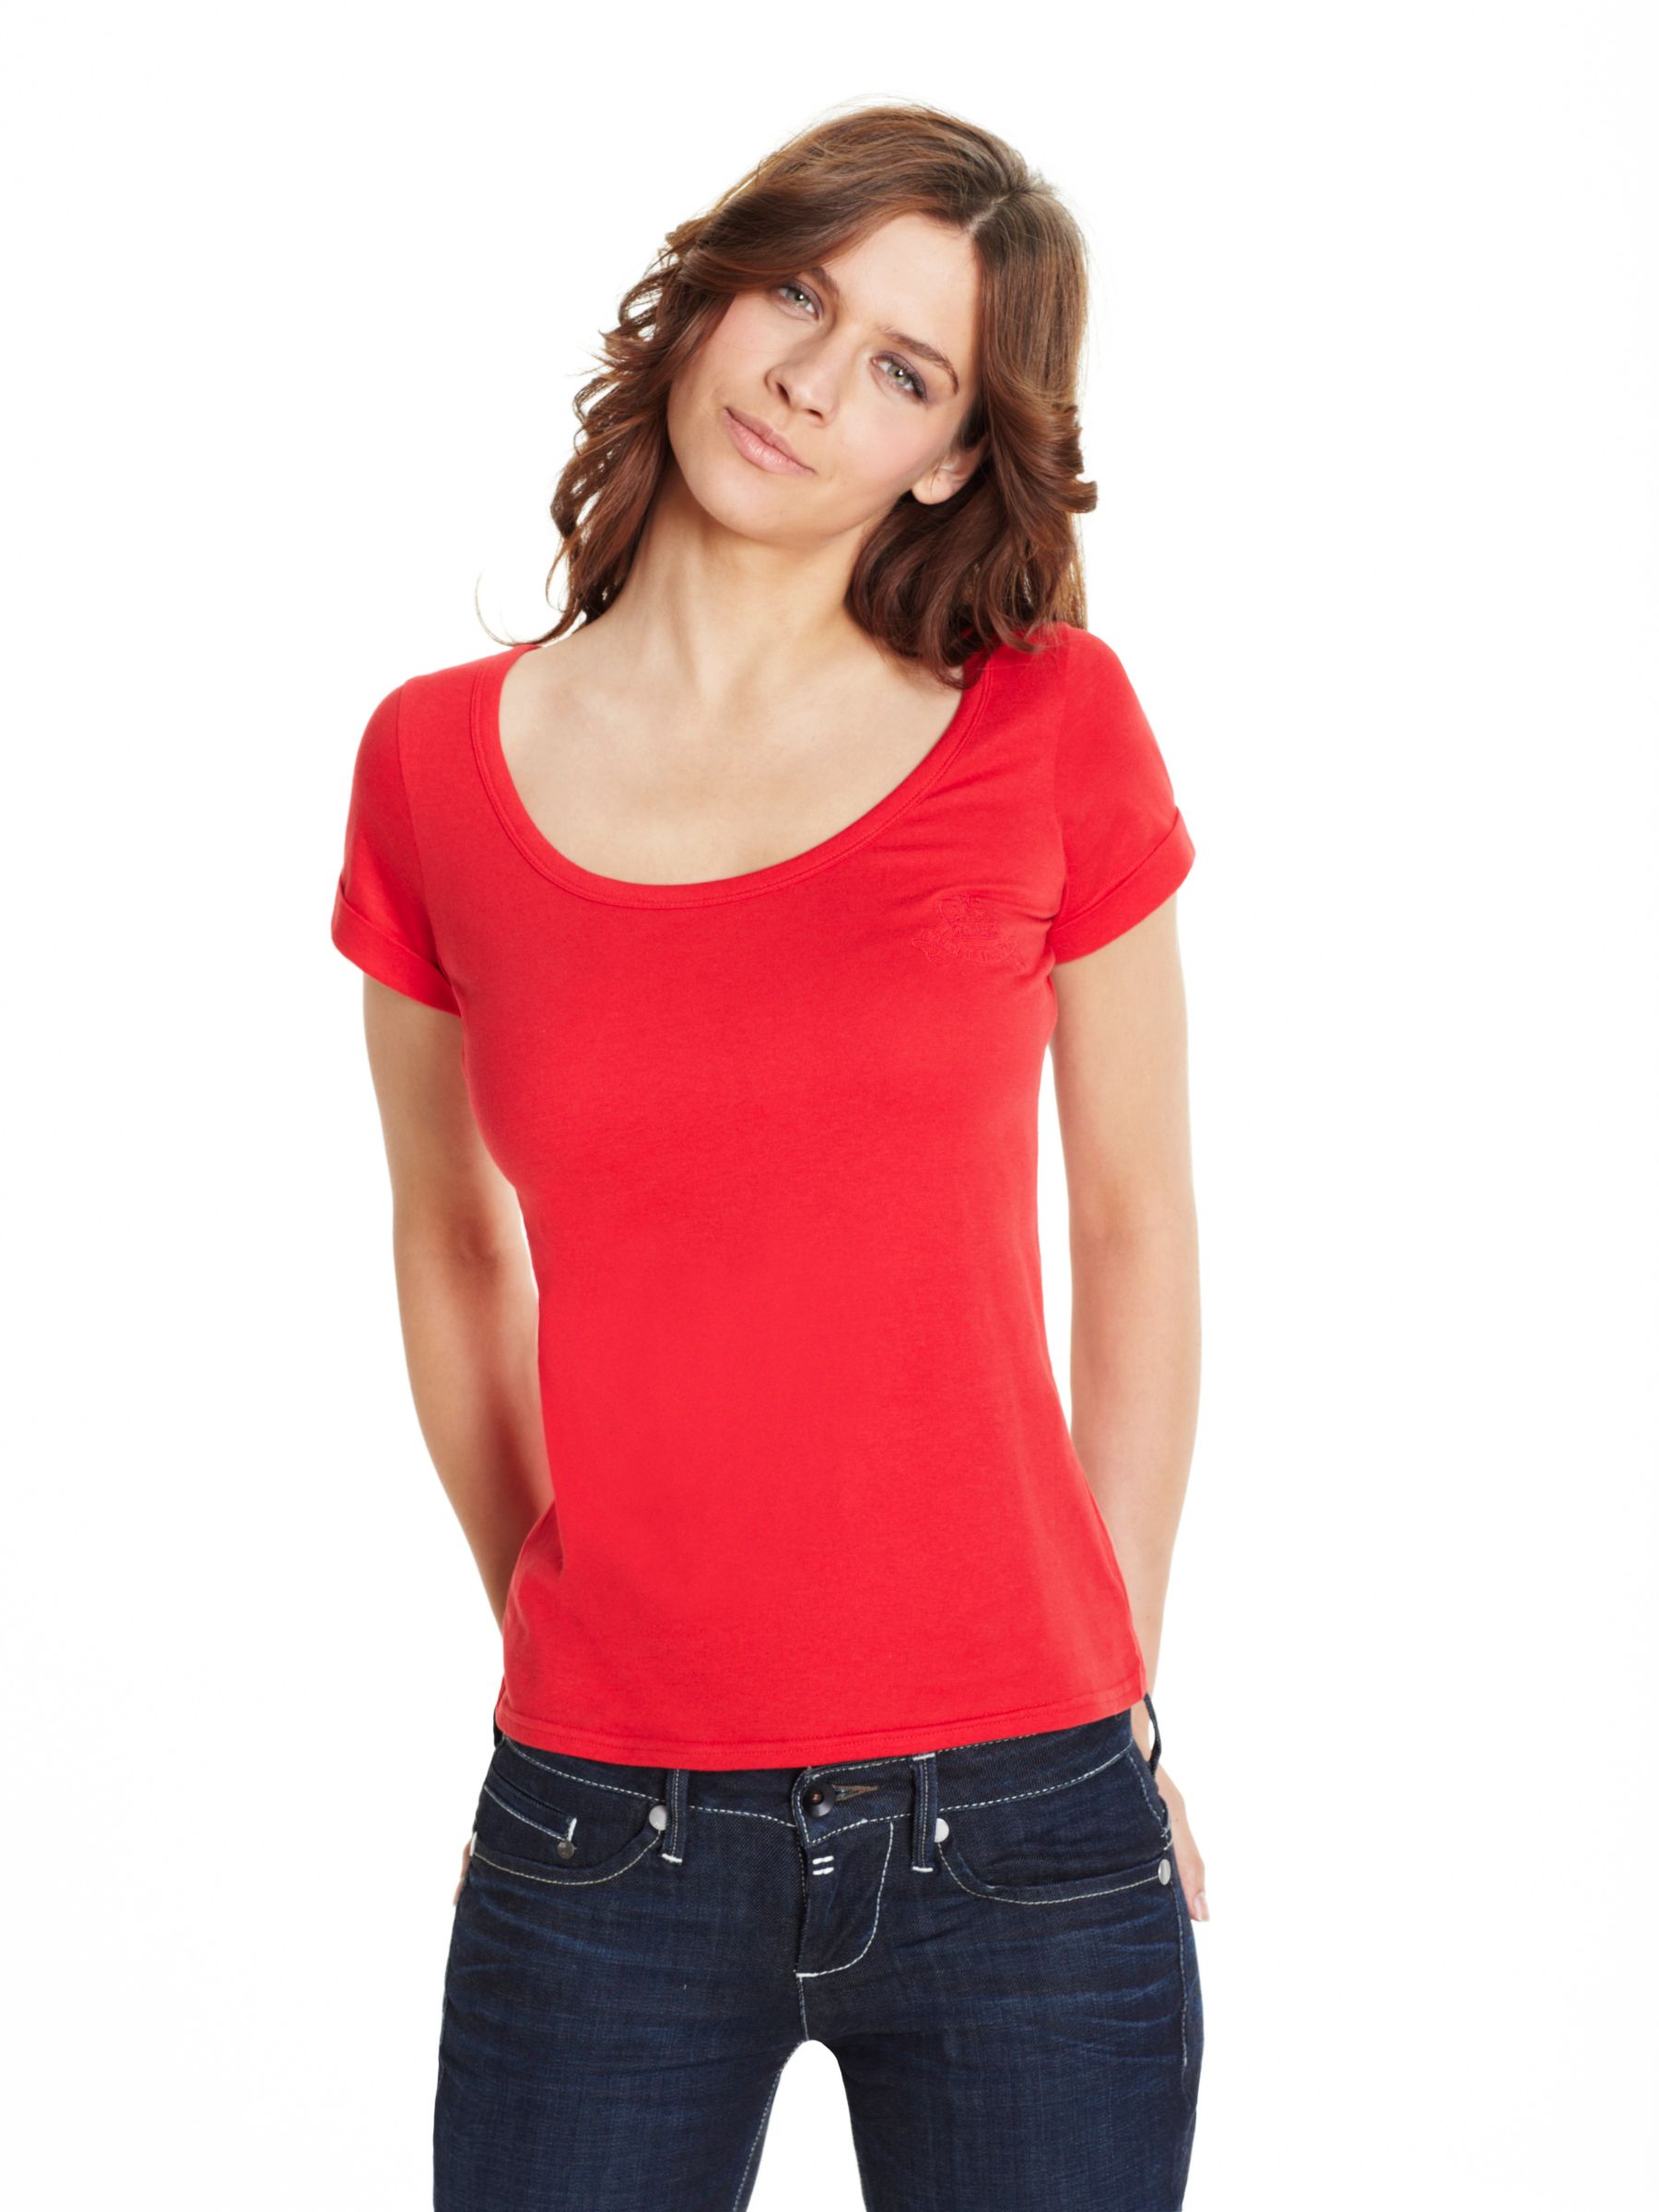 Scoop Neck T-Shirt, Red